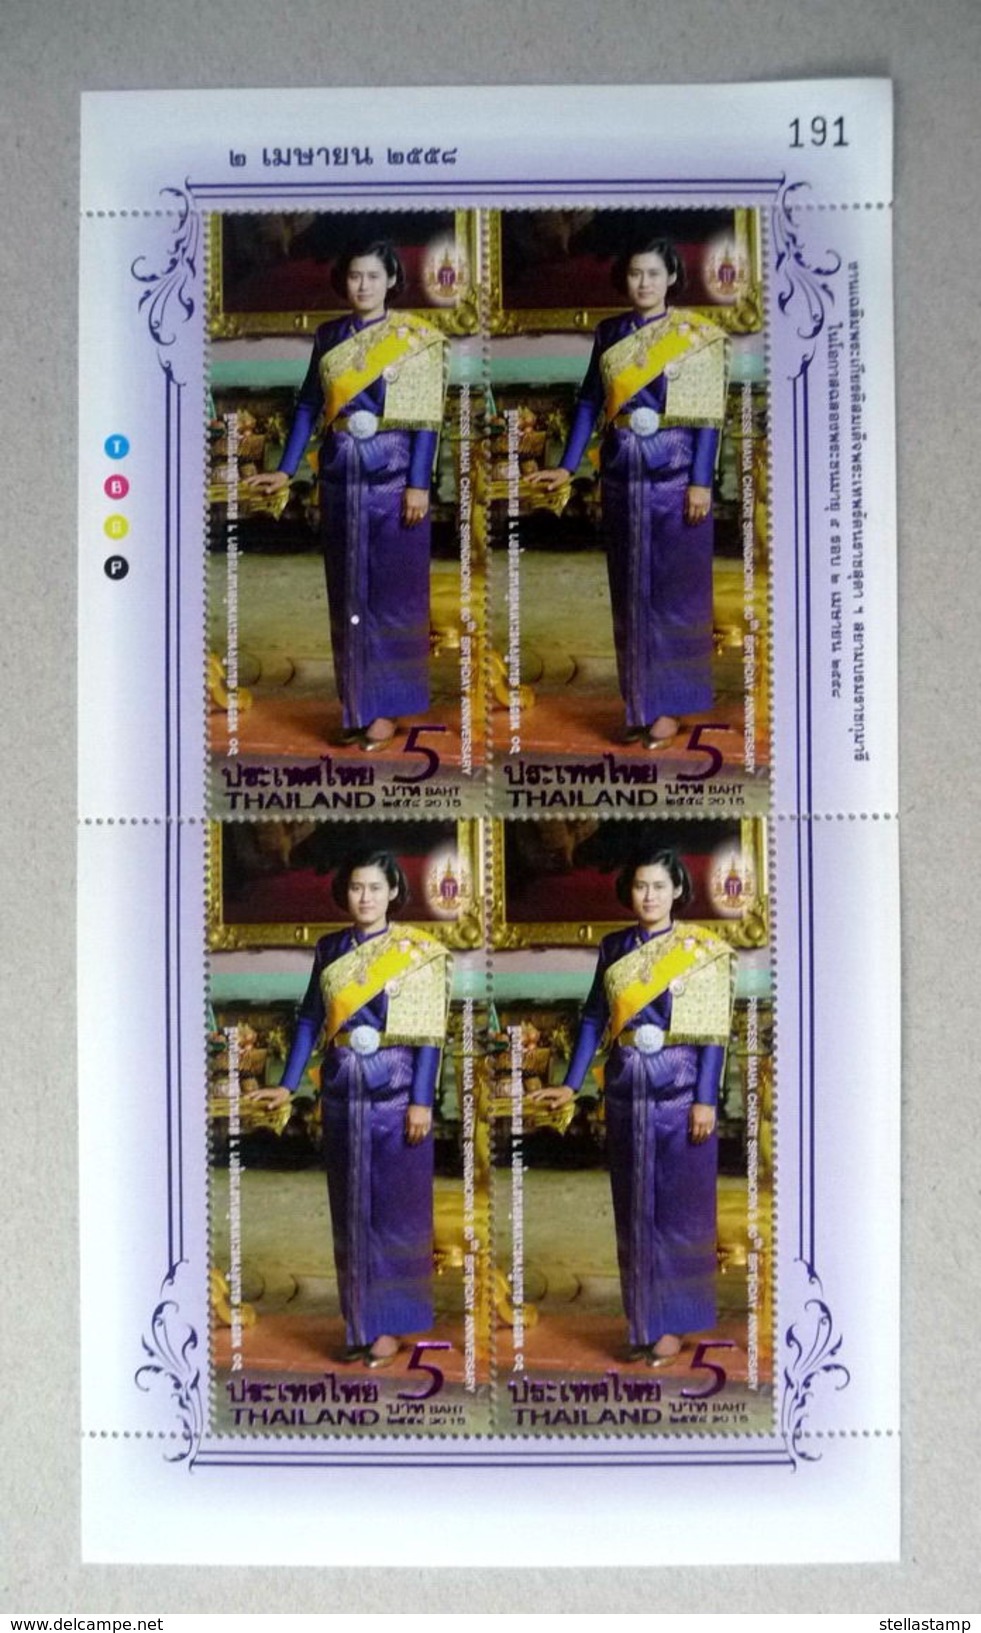 Thailand Stamp Overprint 2015 60th Birthday HRH Princess Maha Chakri Sirindhorn - THAIPOST #8 - Thailand